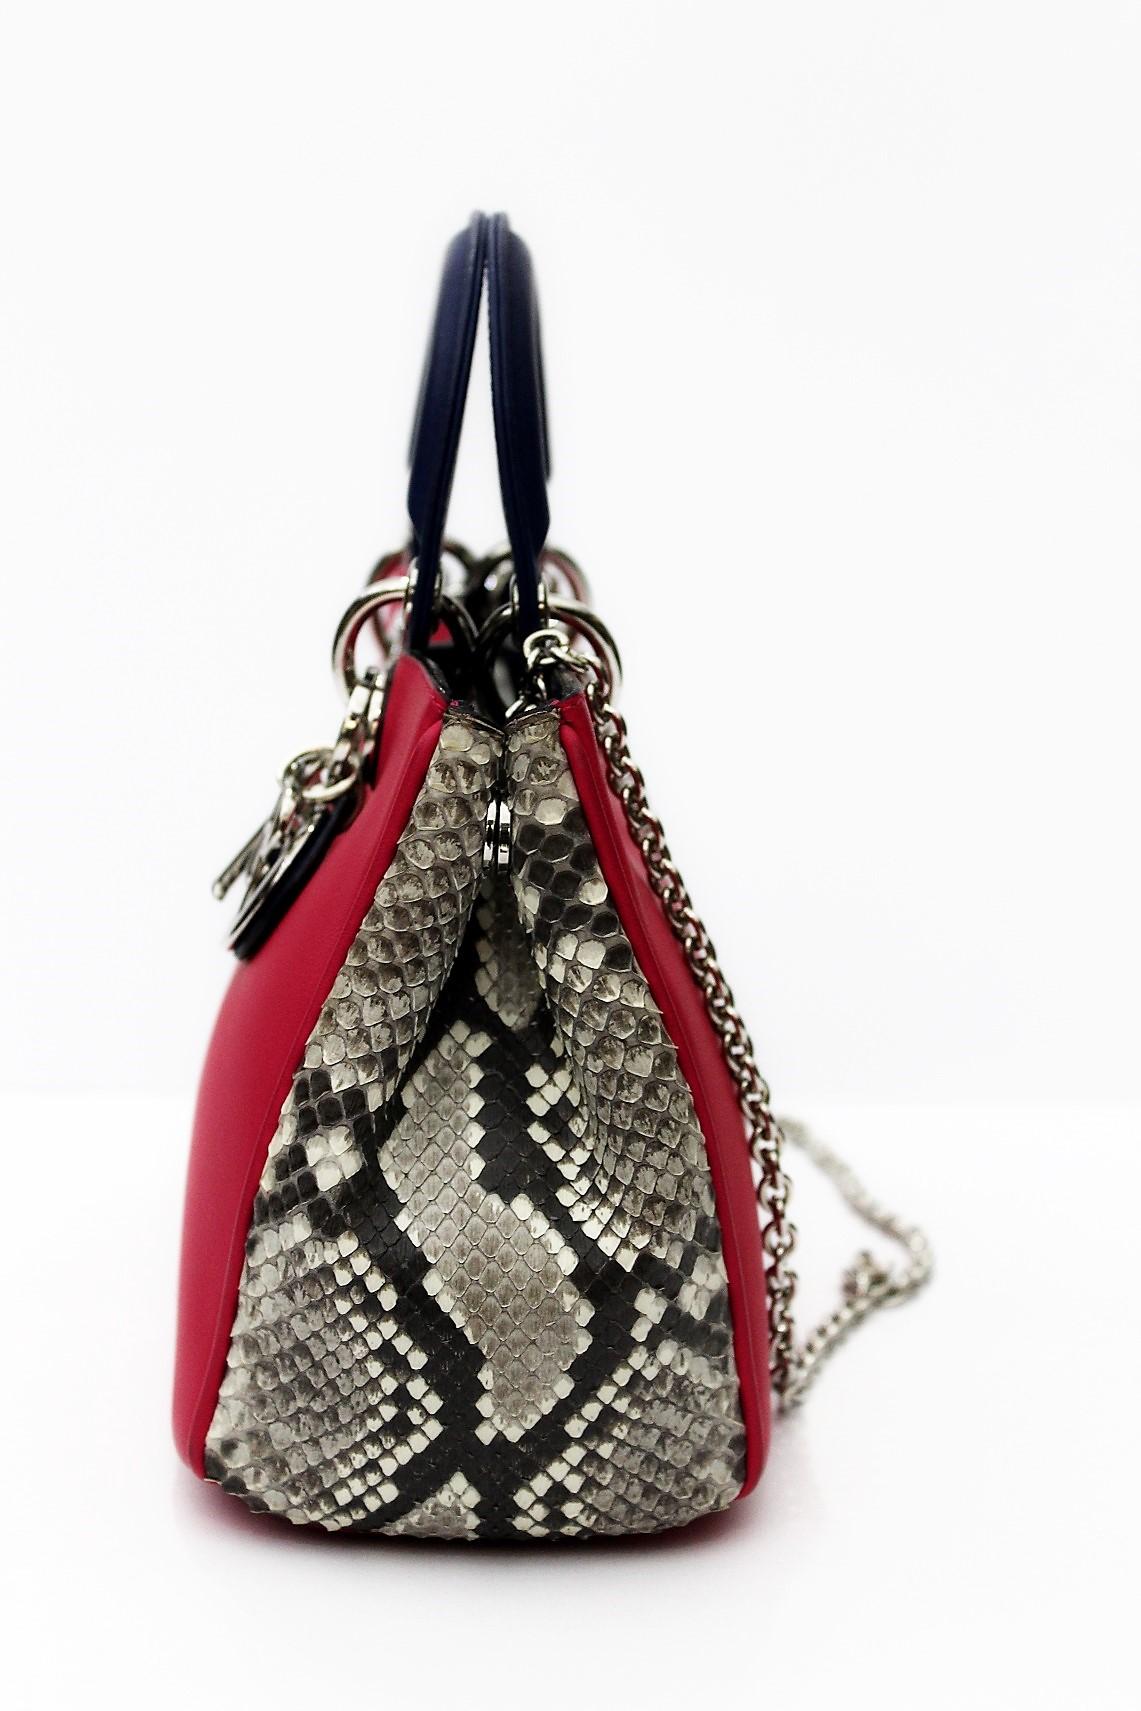 Red Christian Dior Limited Edition Python Leather Handbag